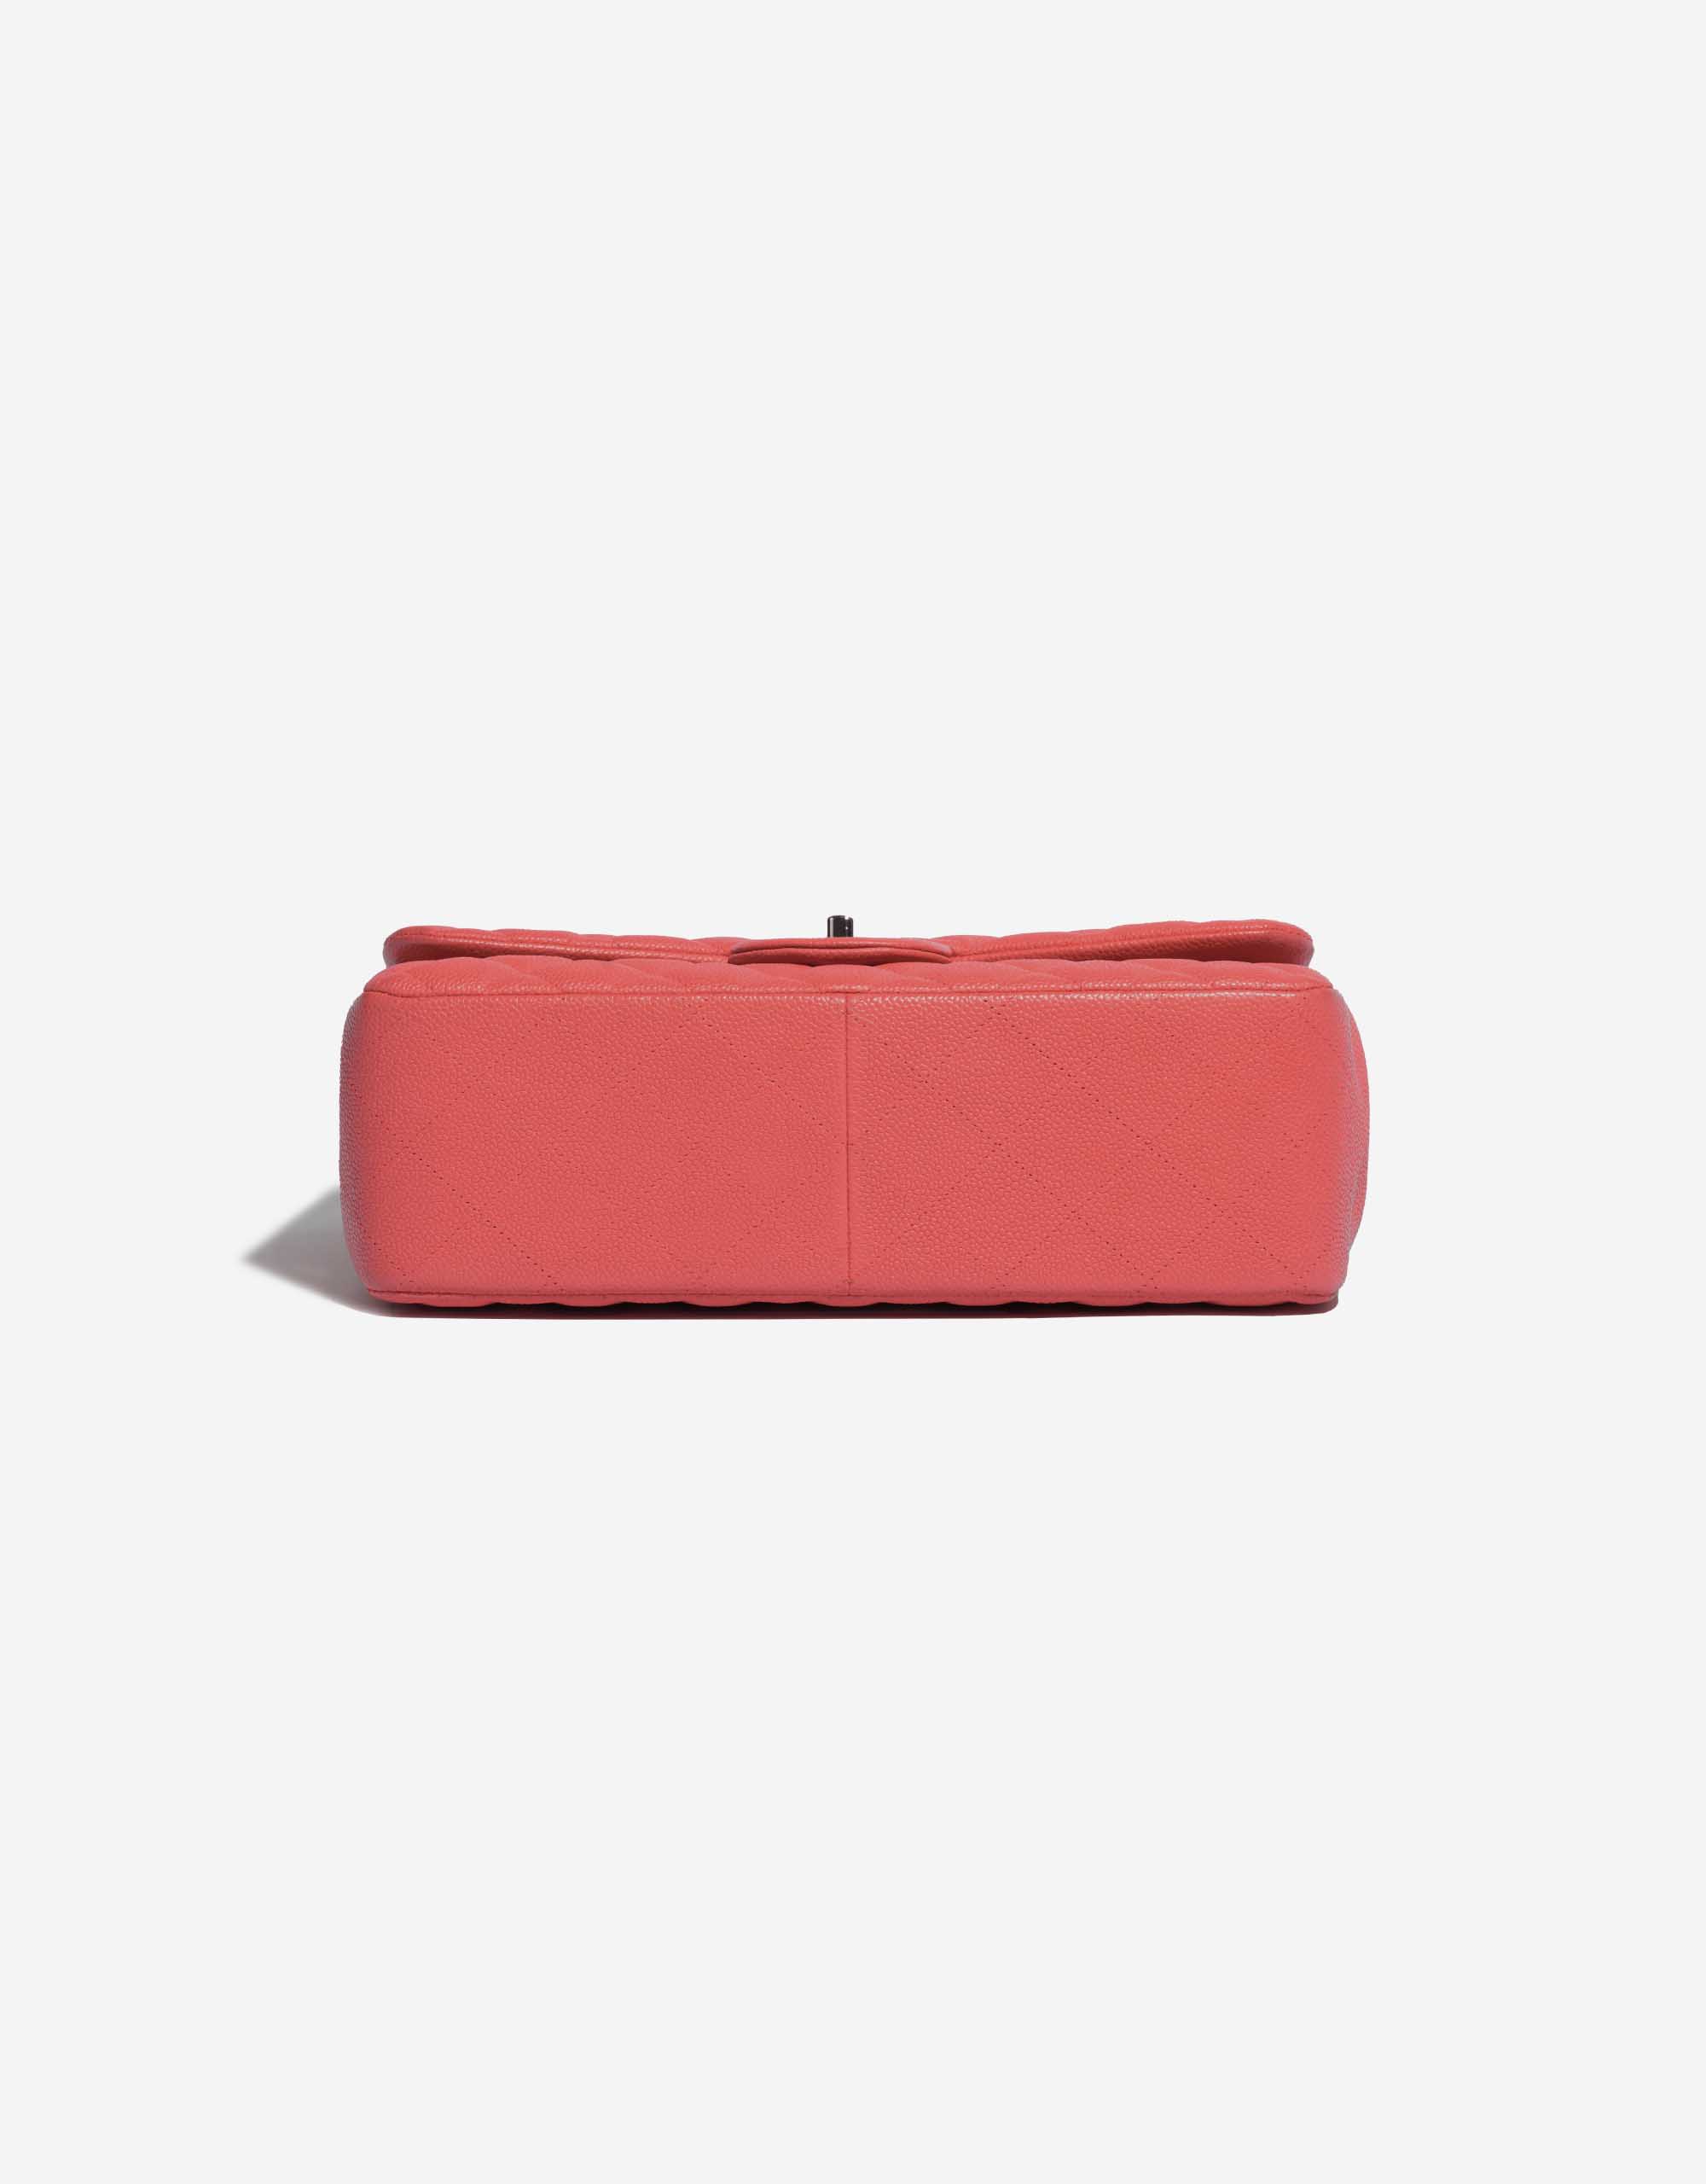 Pre-owned Chanel bag Timeless Jumbo Caviar Coral Pink Bottom | Sell your designer bag on Saclab.com